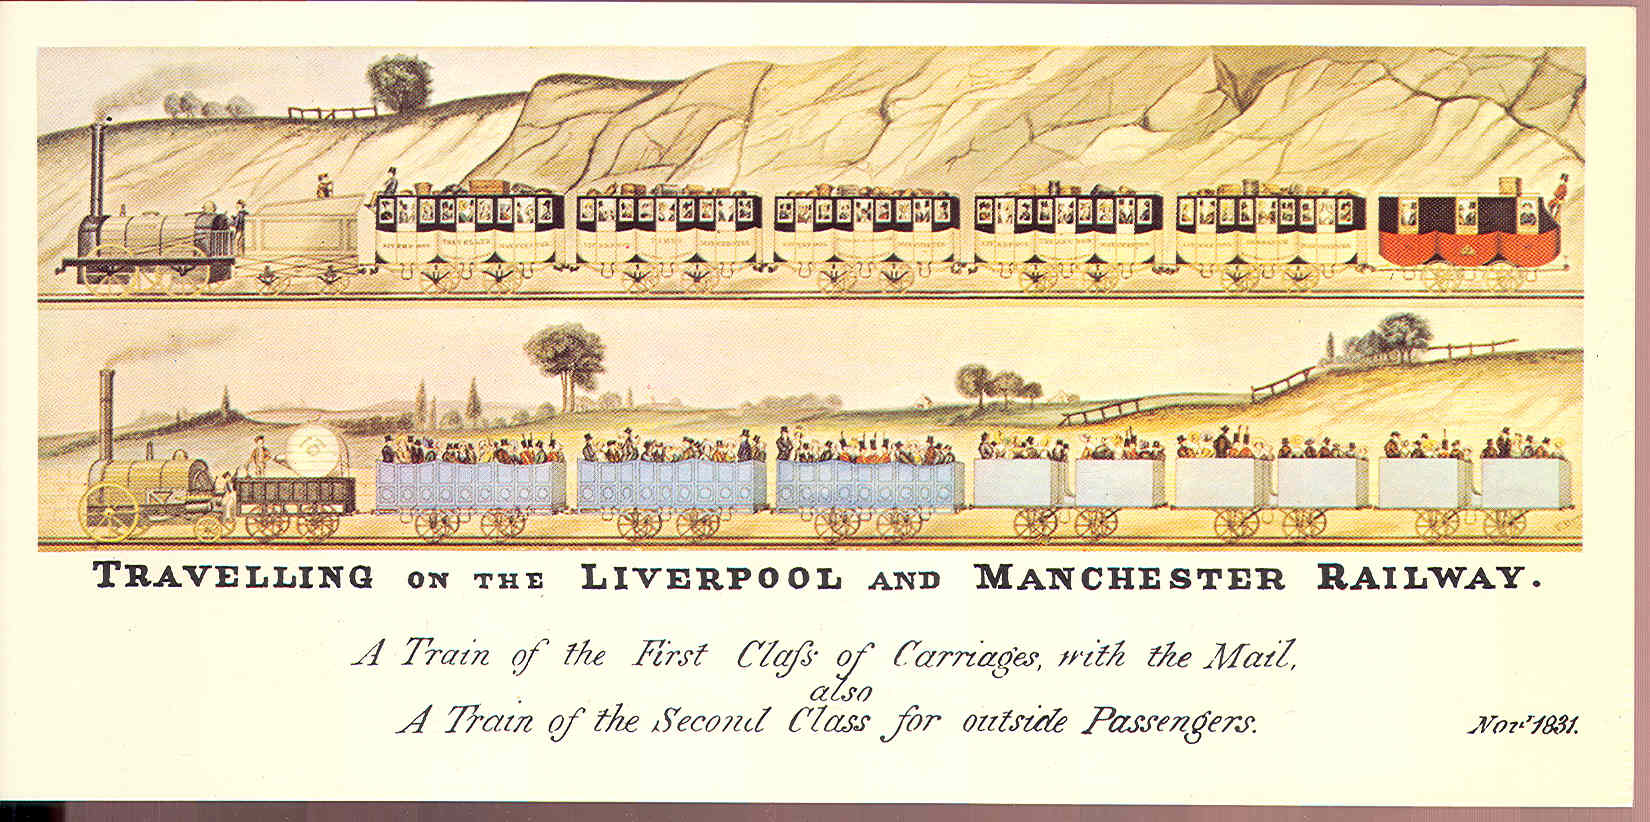 First railway. Железная дорога Ливерпуль Манчестер. Железная дорога Манчестер Ливерпуль 1830. Открытие железной дороги Ливерпуль-Манчестер. Первая железная дорога Ливерпуль Манчестер.